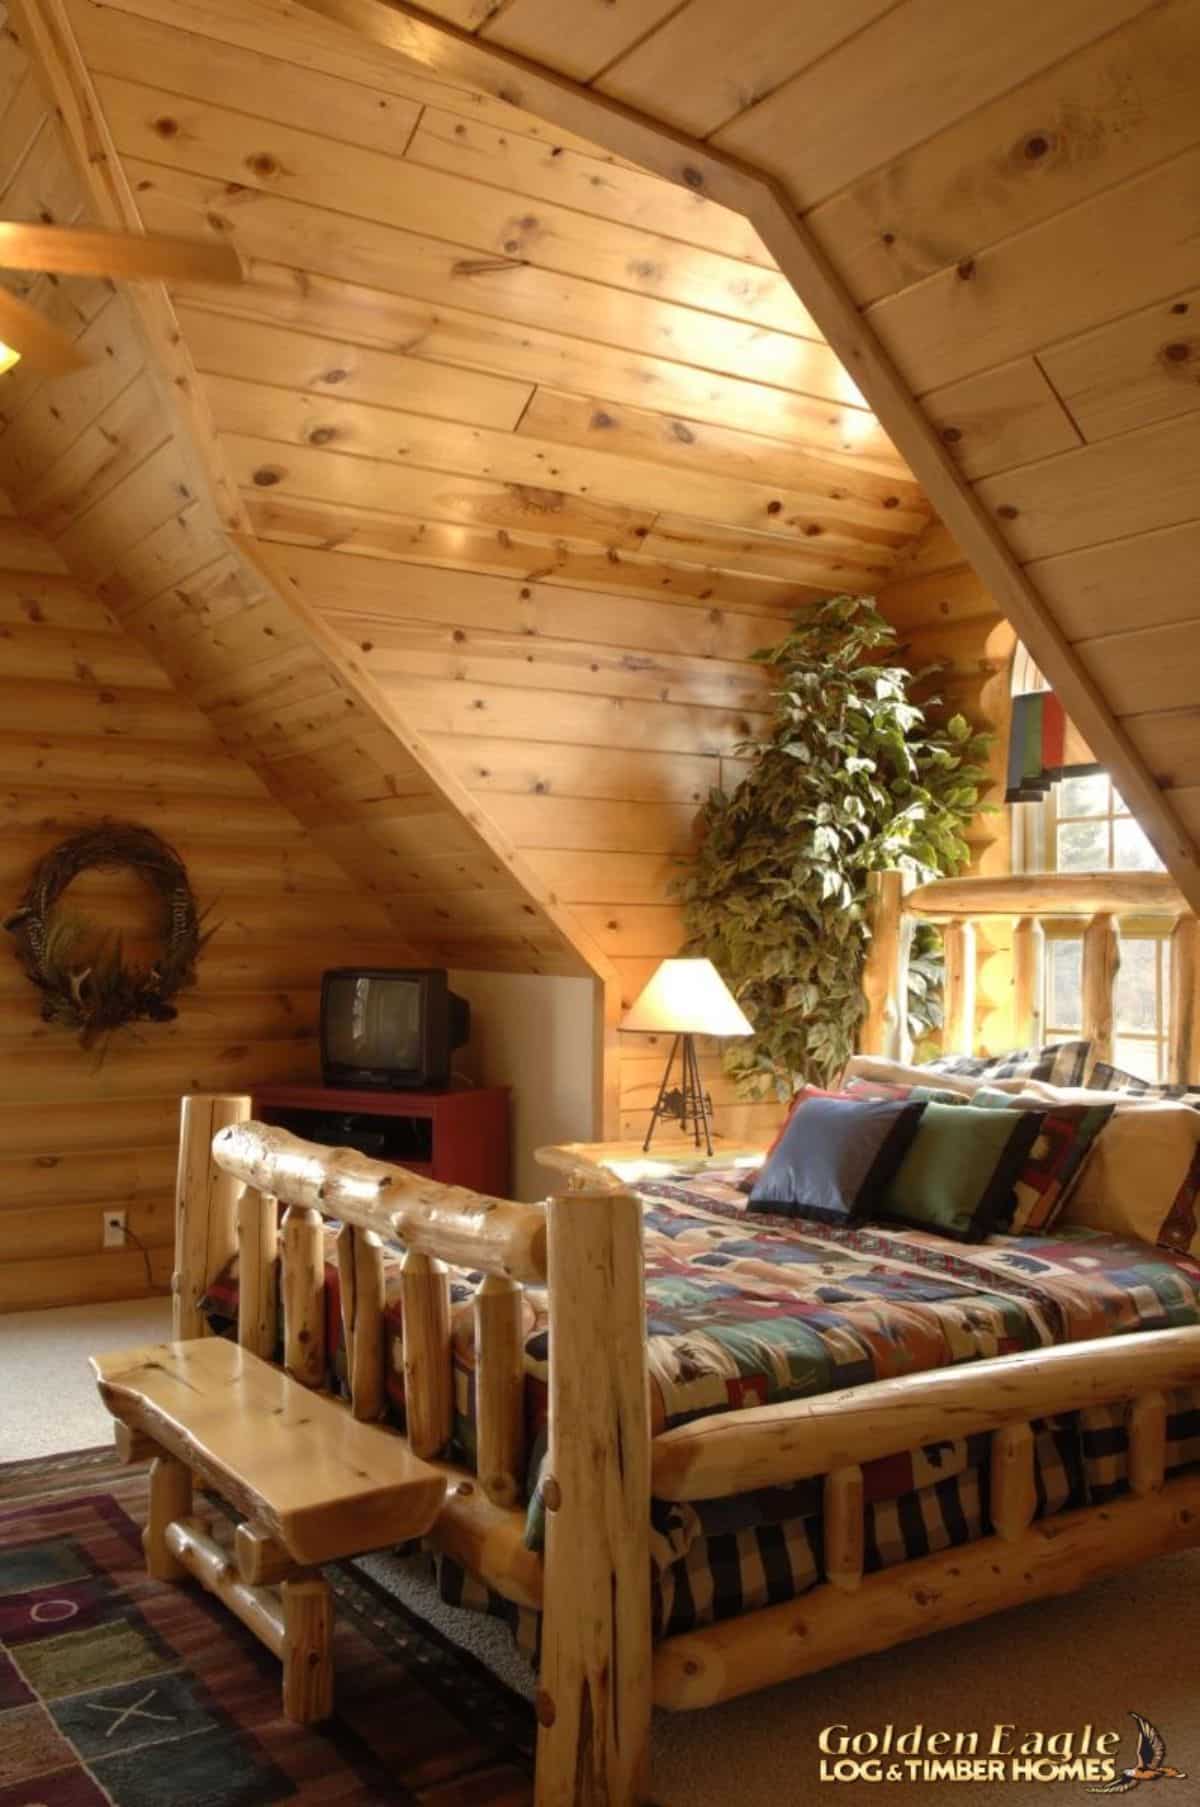 wood bed frame under dormer window in cabin